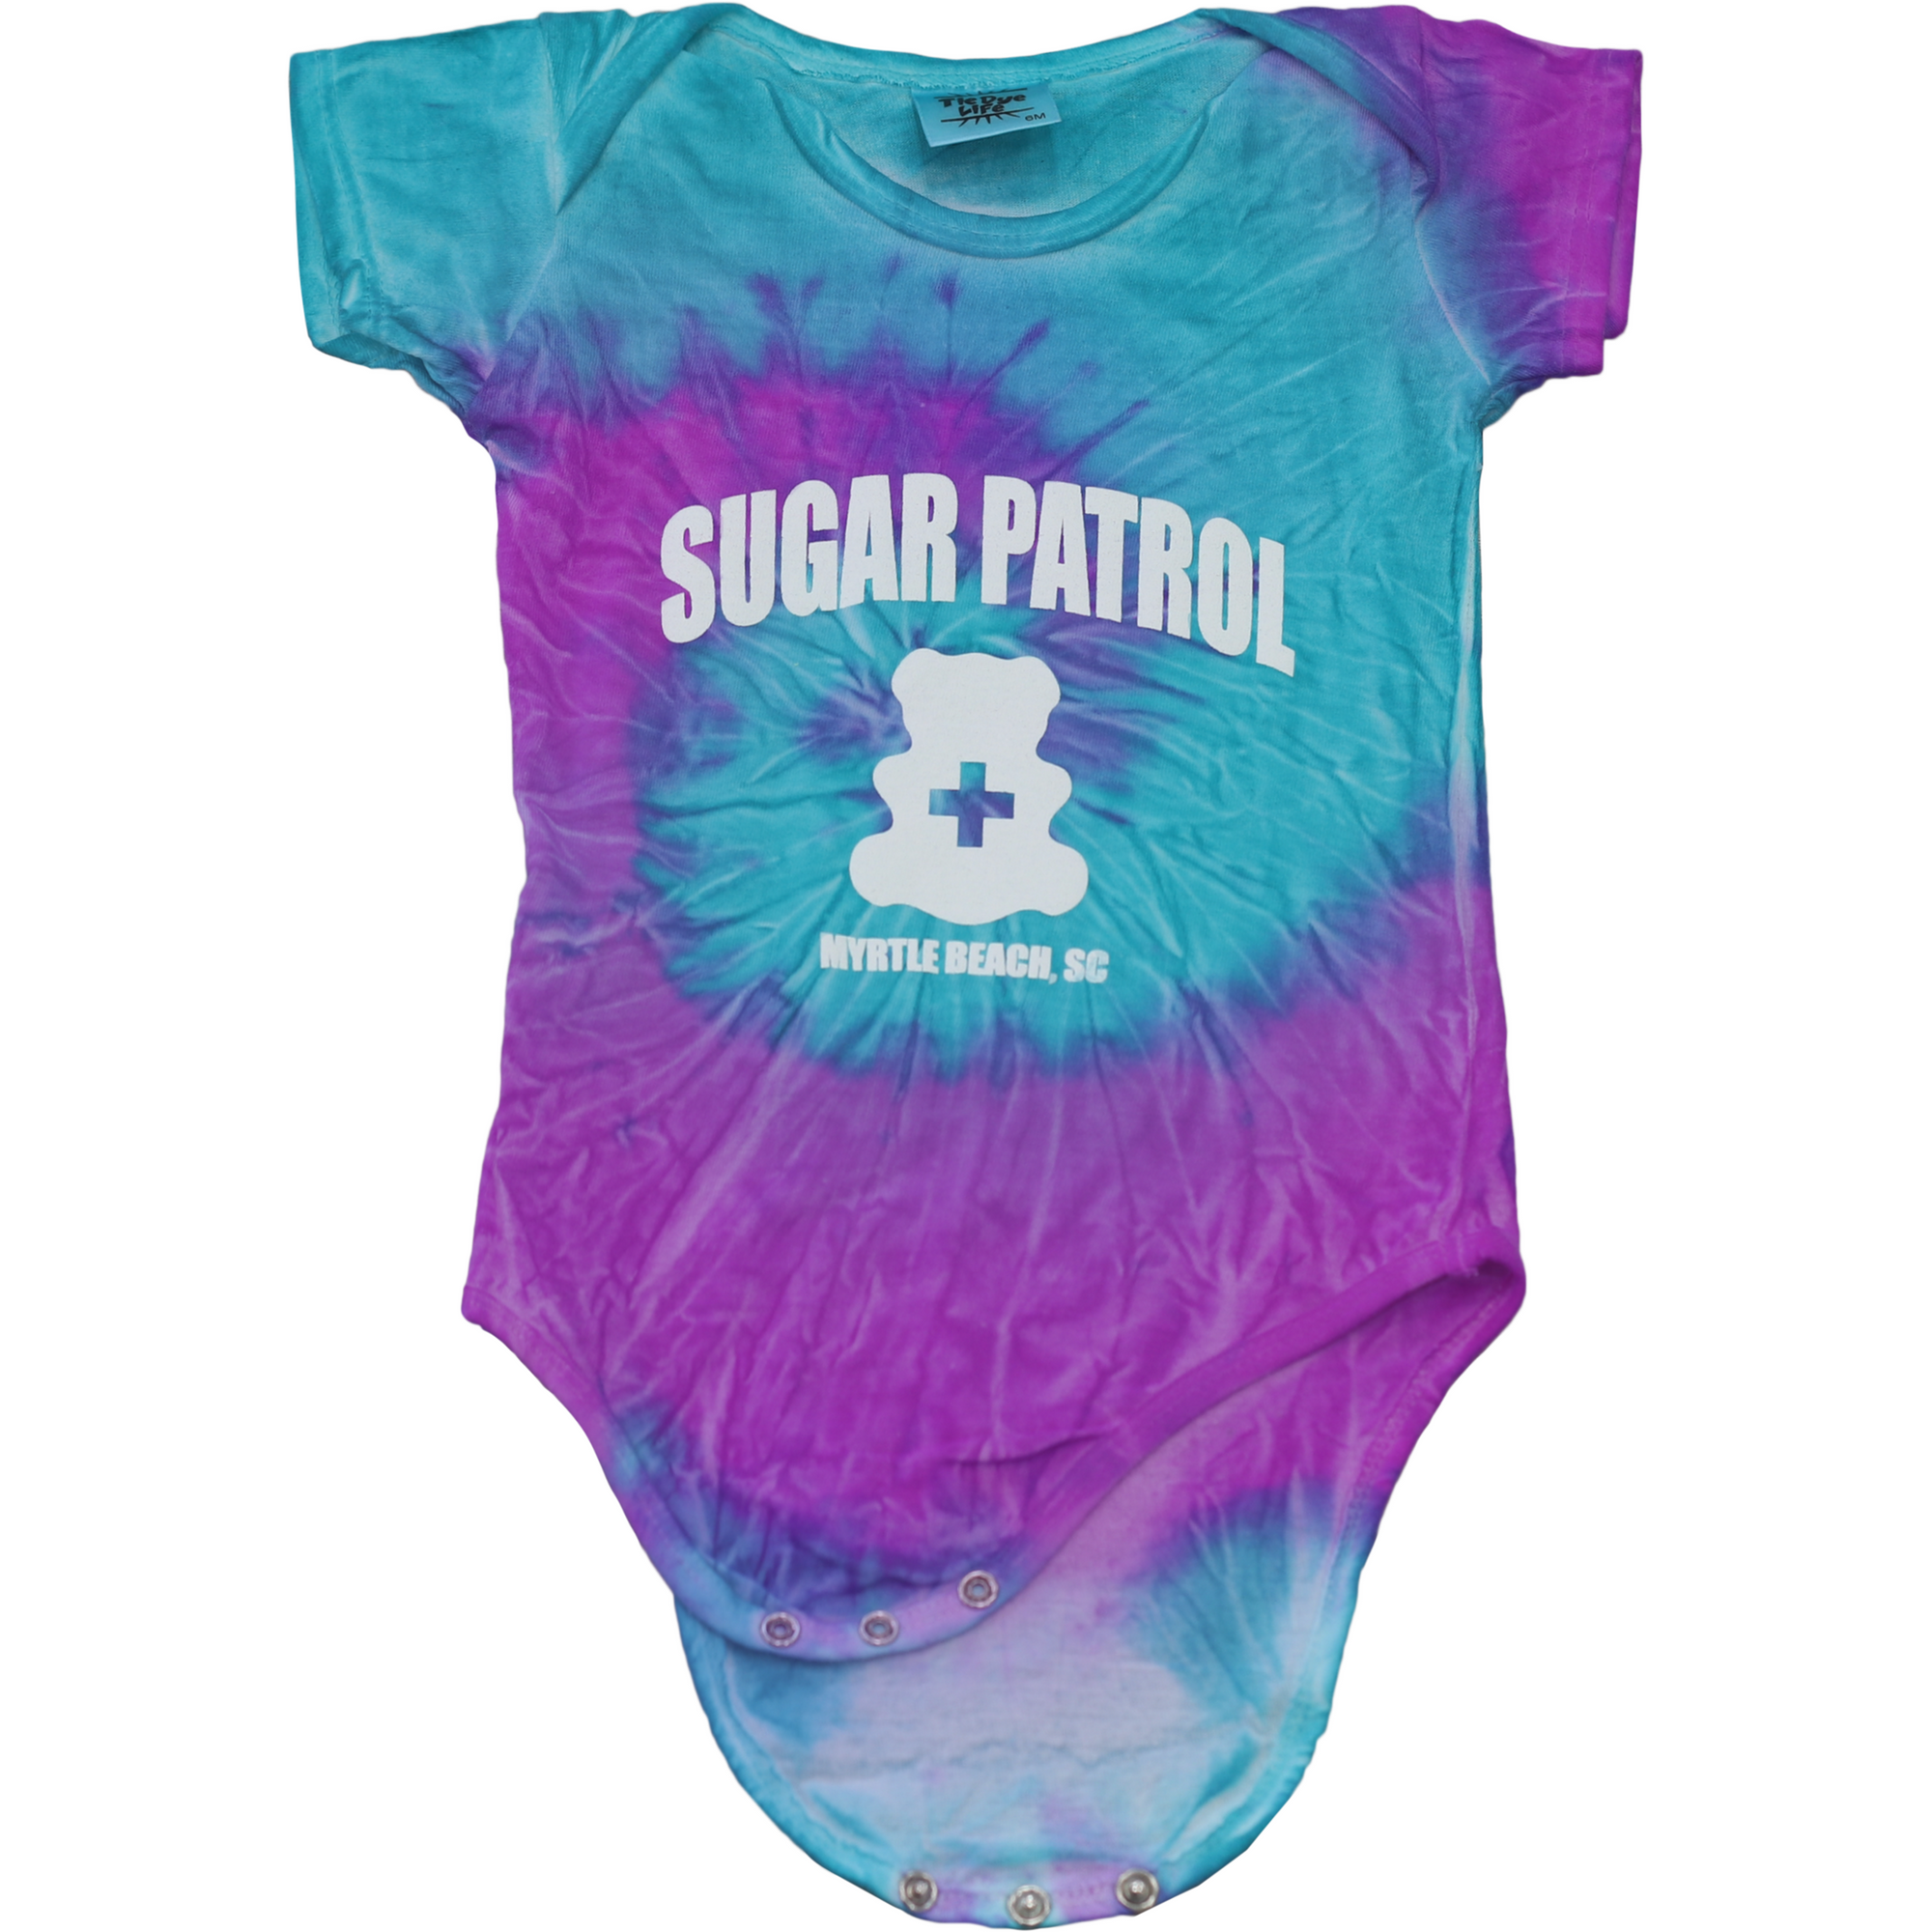 Sugar Patrol Infant Onesie - Purple Berry Jelly Donut Tie Dye